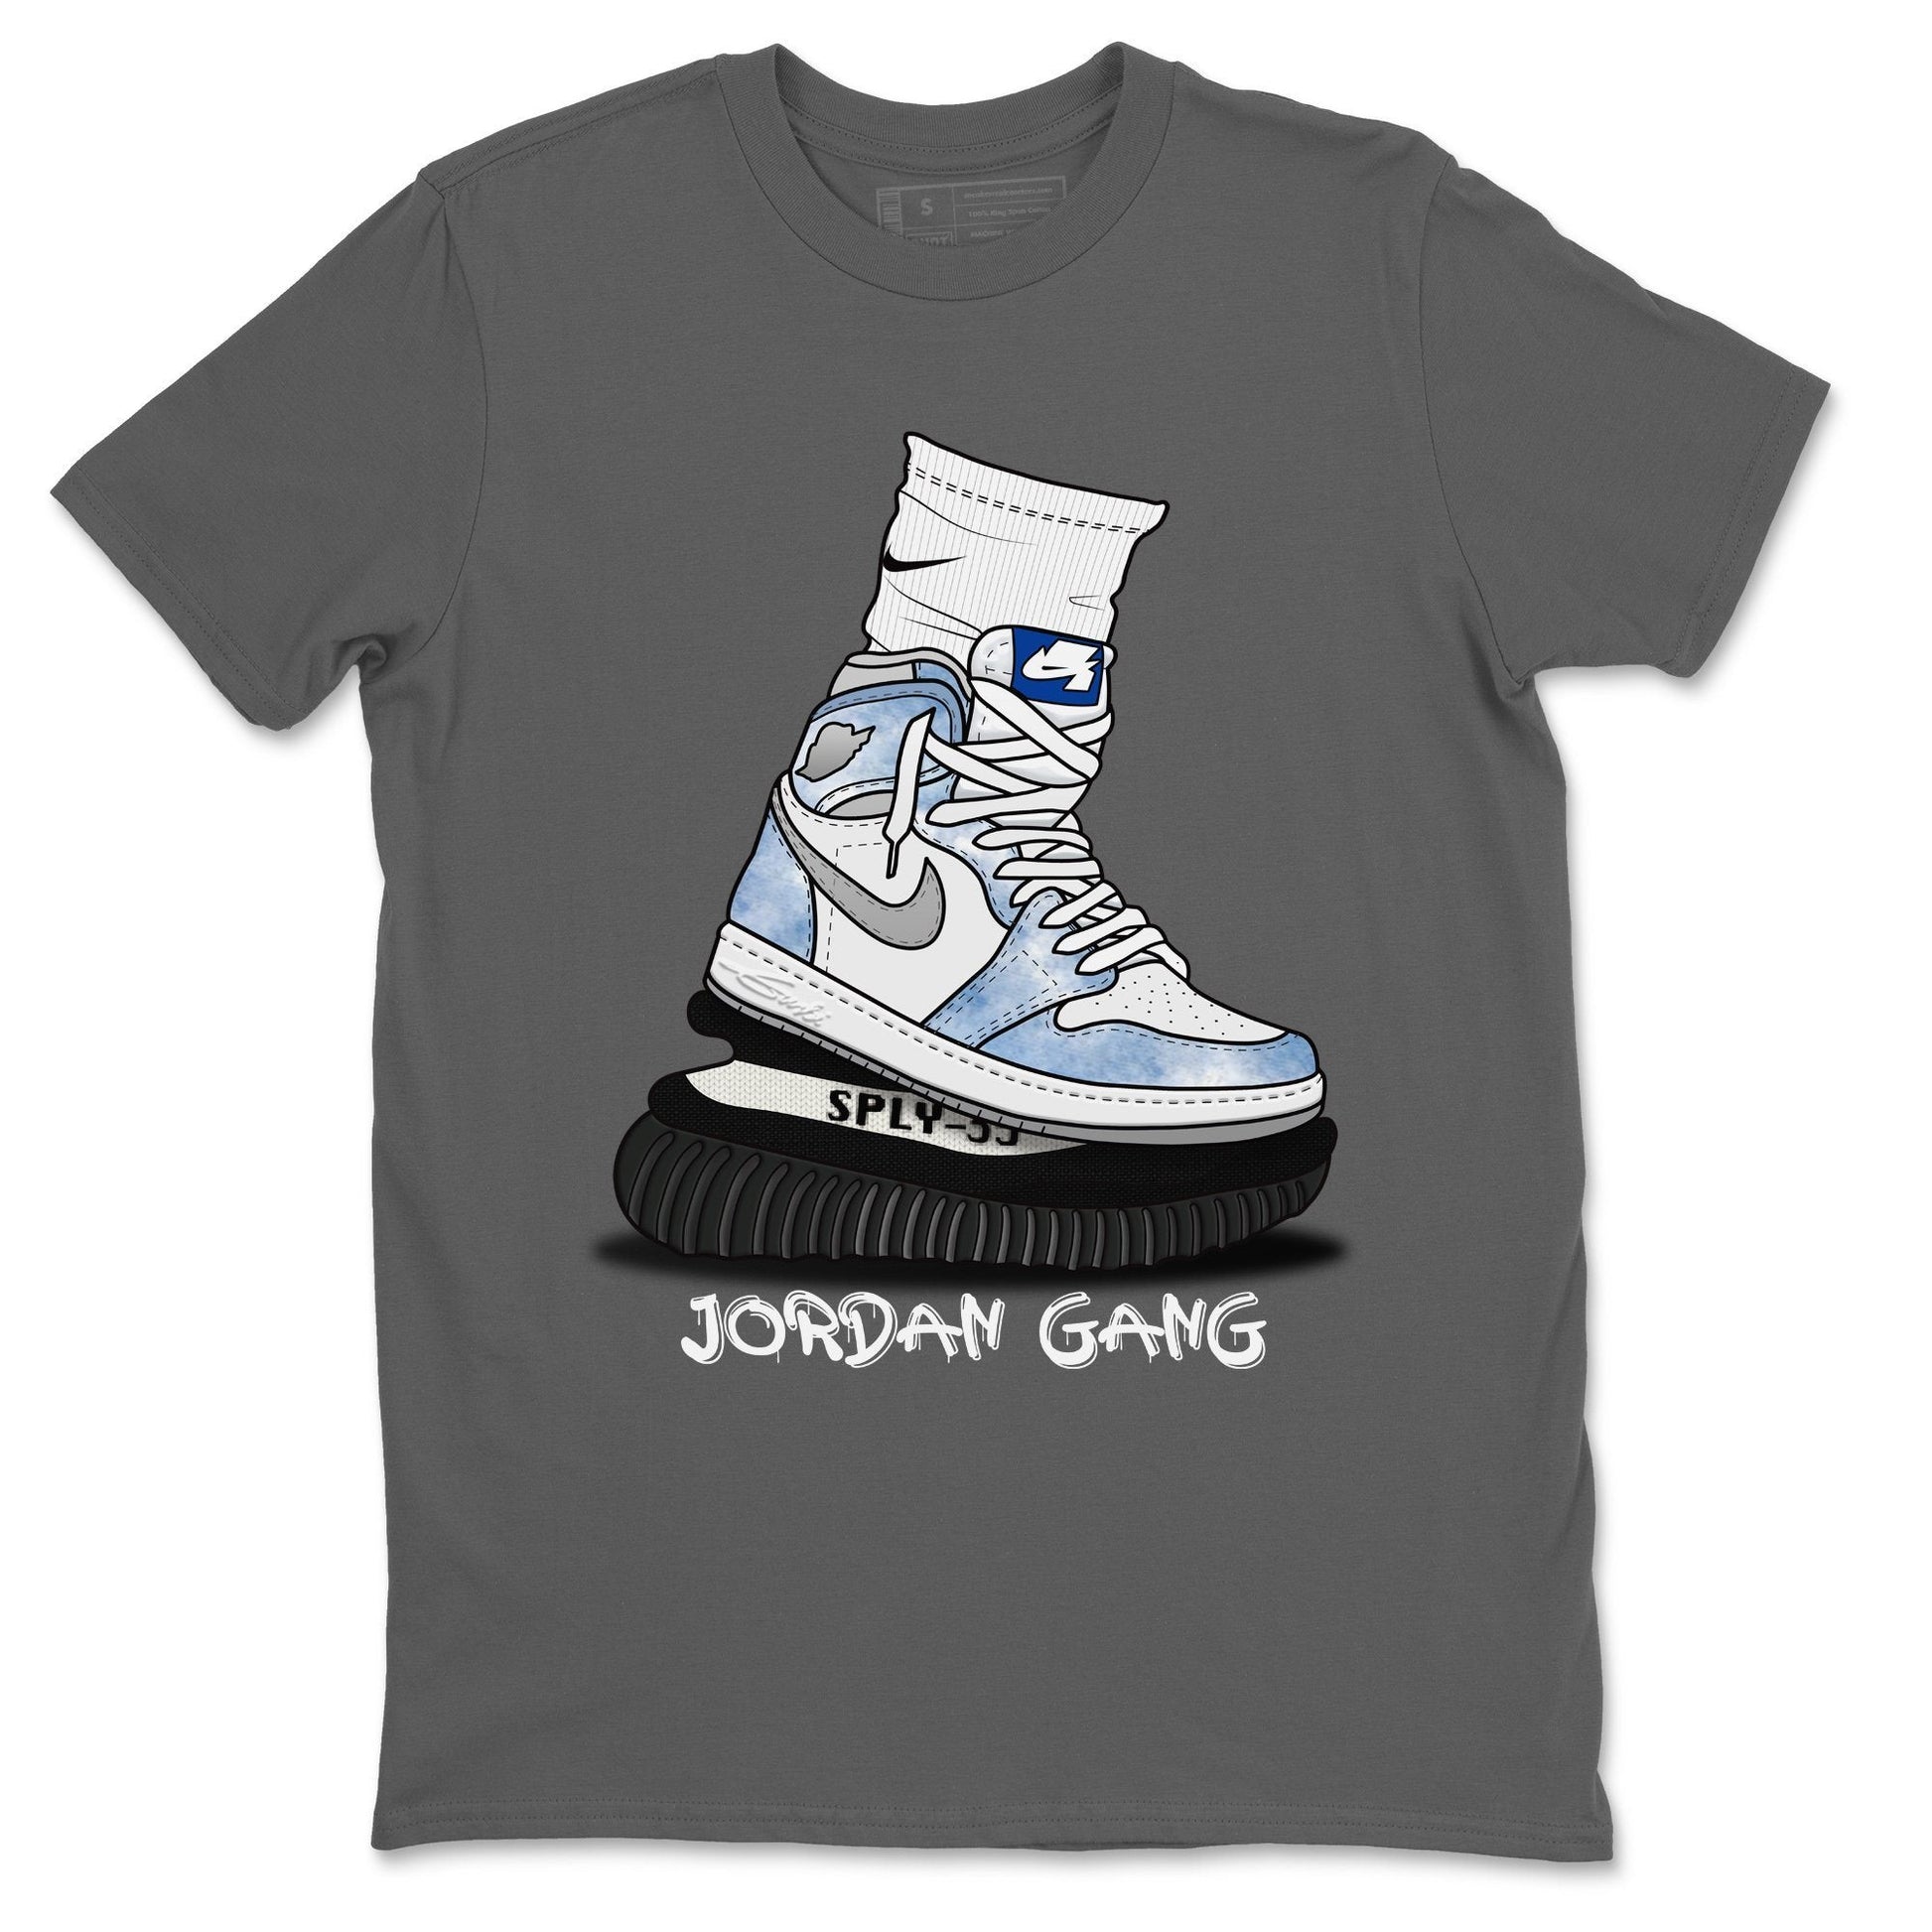 Jordan 1 Hyper Royal Sneaker Match Tees Jordan Gang Sneaker Tees Jordan 1 Hyper Royal Sneaker Release Tees Unisex Shirts